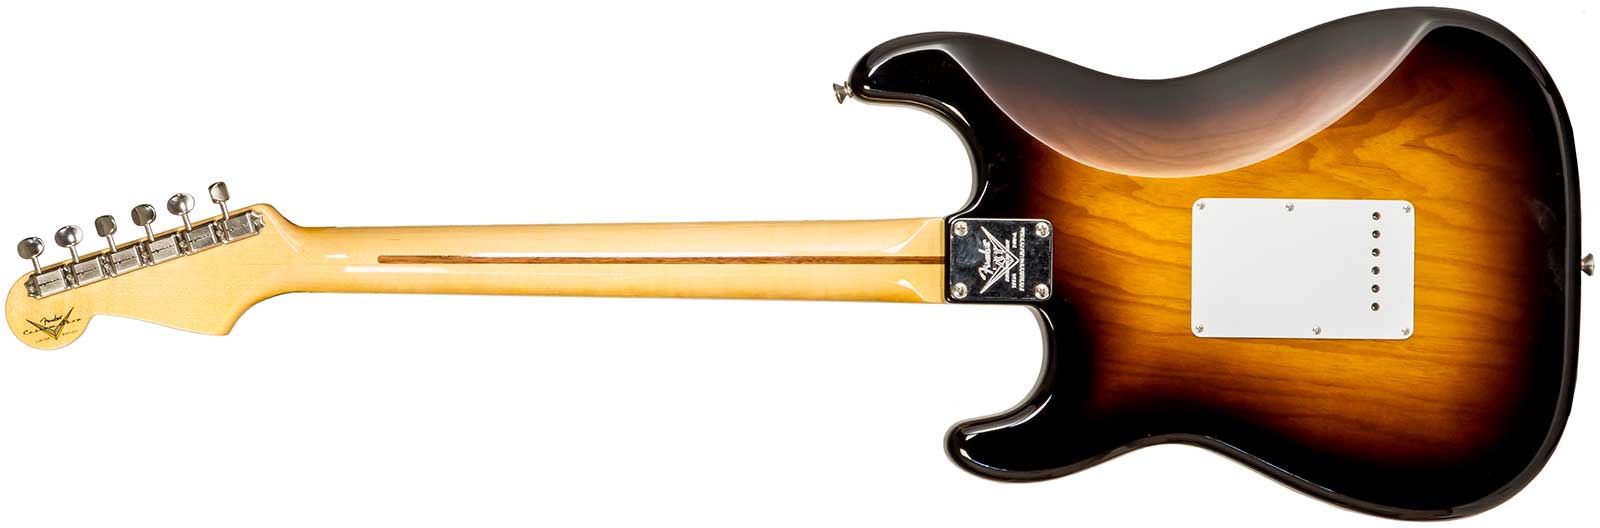 Fender Custom Shop Strat 1954 70th Anniv. #xn4597 3s Trem Mn - Time Capsule 2-color Sunburst - Guitare Électrique Forme Str - Variation 1